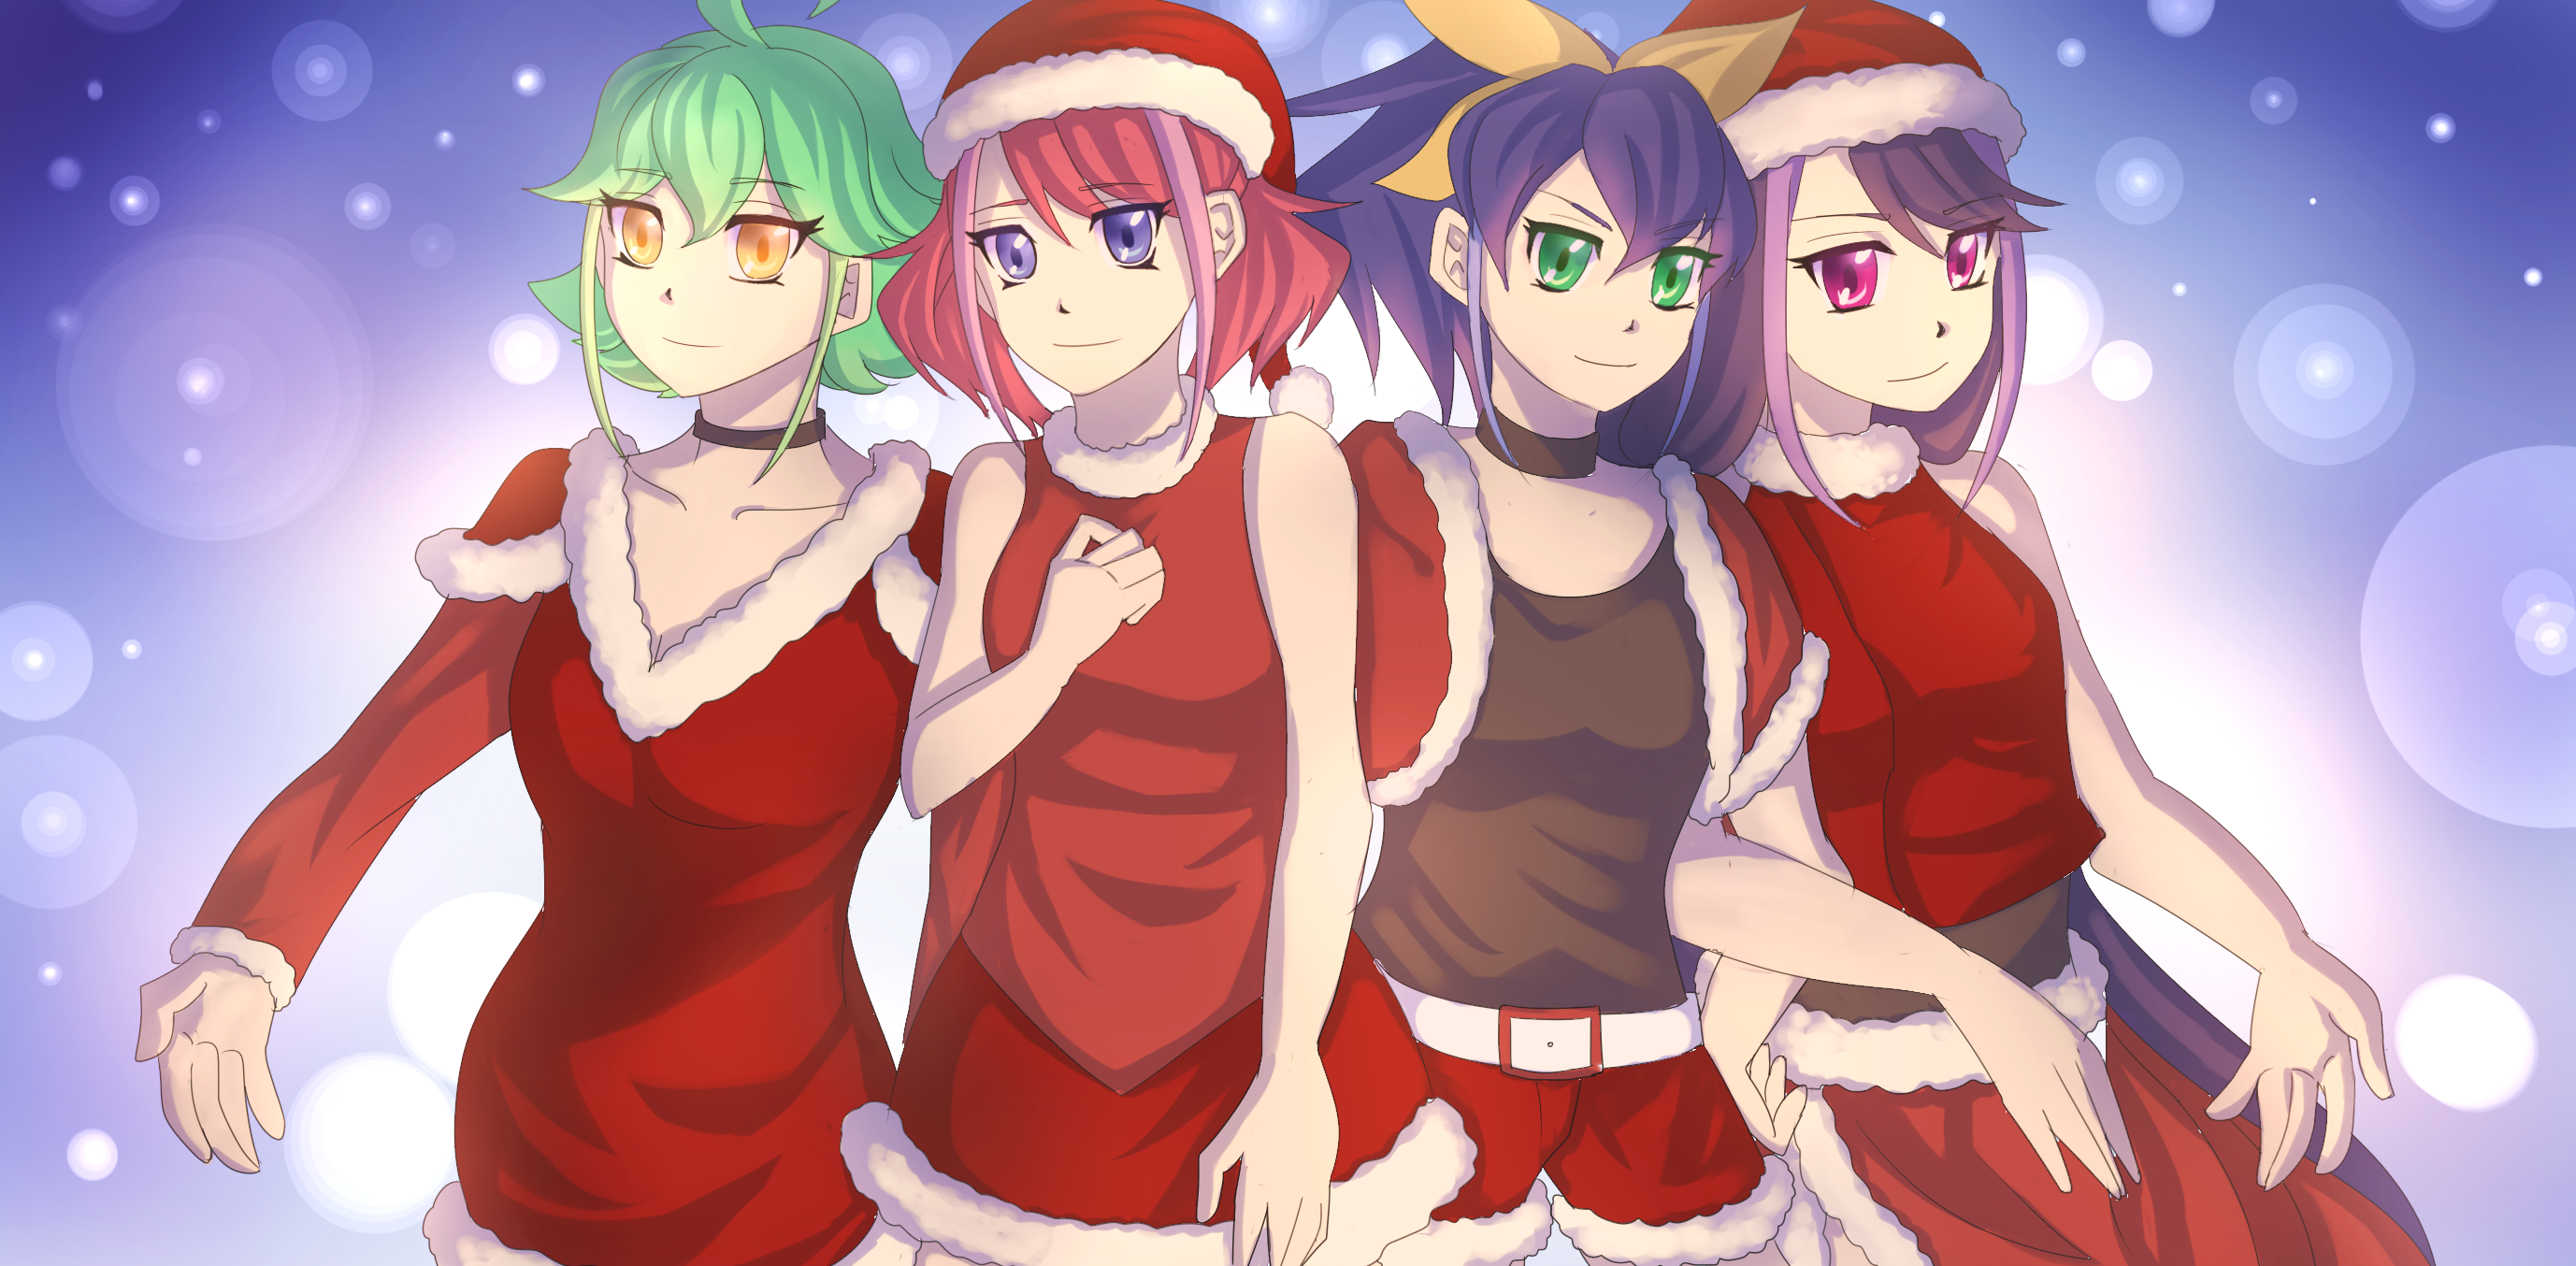 Anime 2755x1354 artwork digital art fan art Christmas Christmas clothes christmas dress Yu-Gi-Oh! Yu-Gi-Oh! ARC-V Hiiragi Yuzu Kurosaki Ruri Rin (Yu-Gi-Oh) Serena (Yu-Gi-Oh) twintails long hair ahoge ponytail